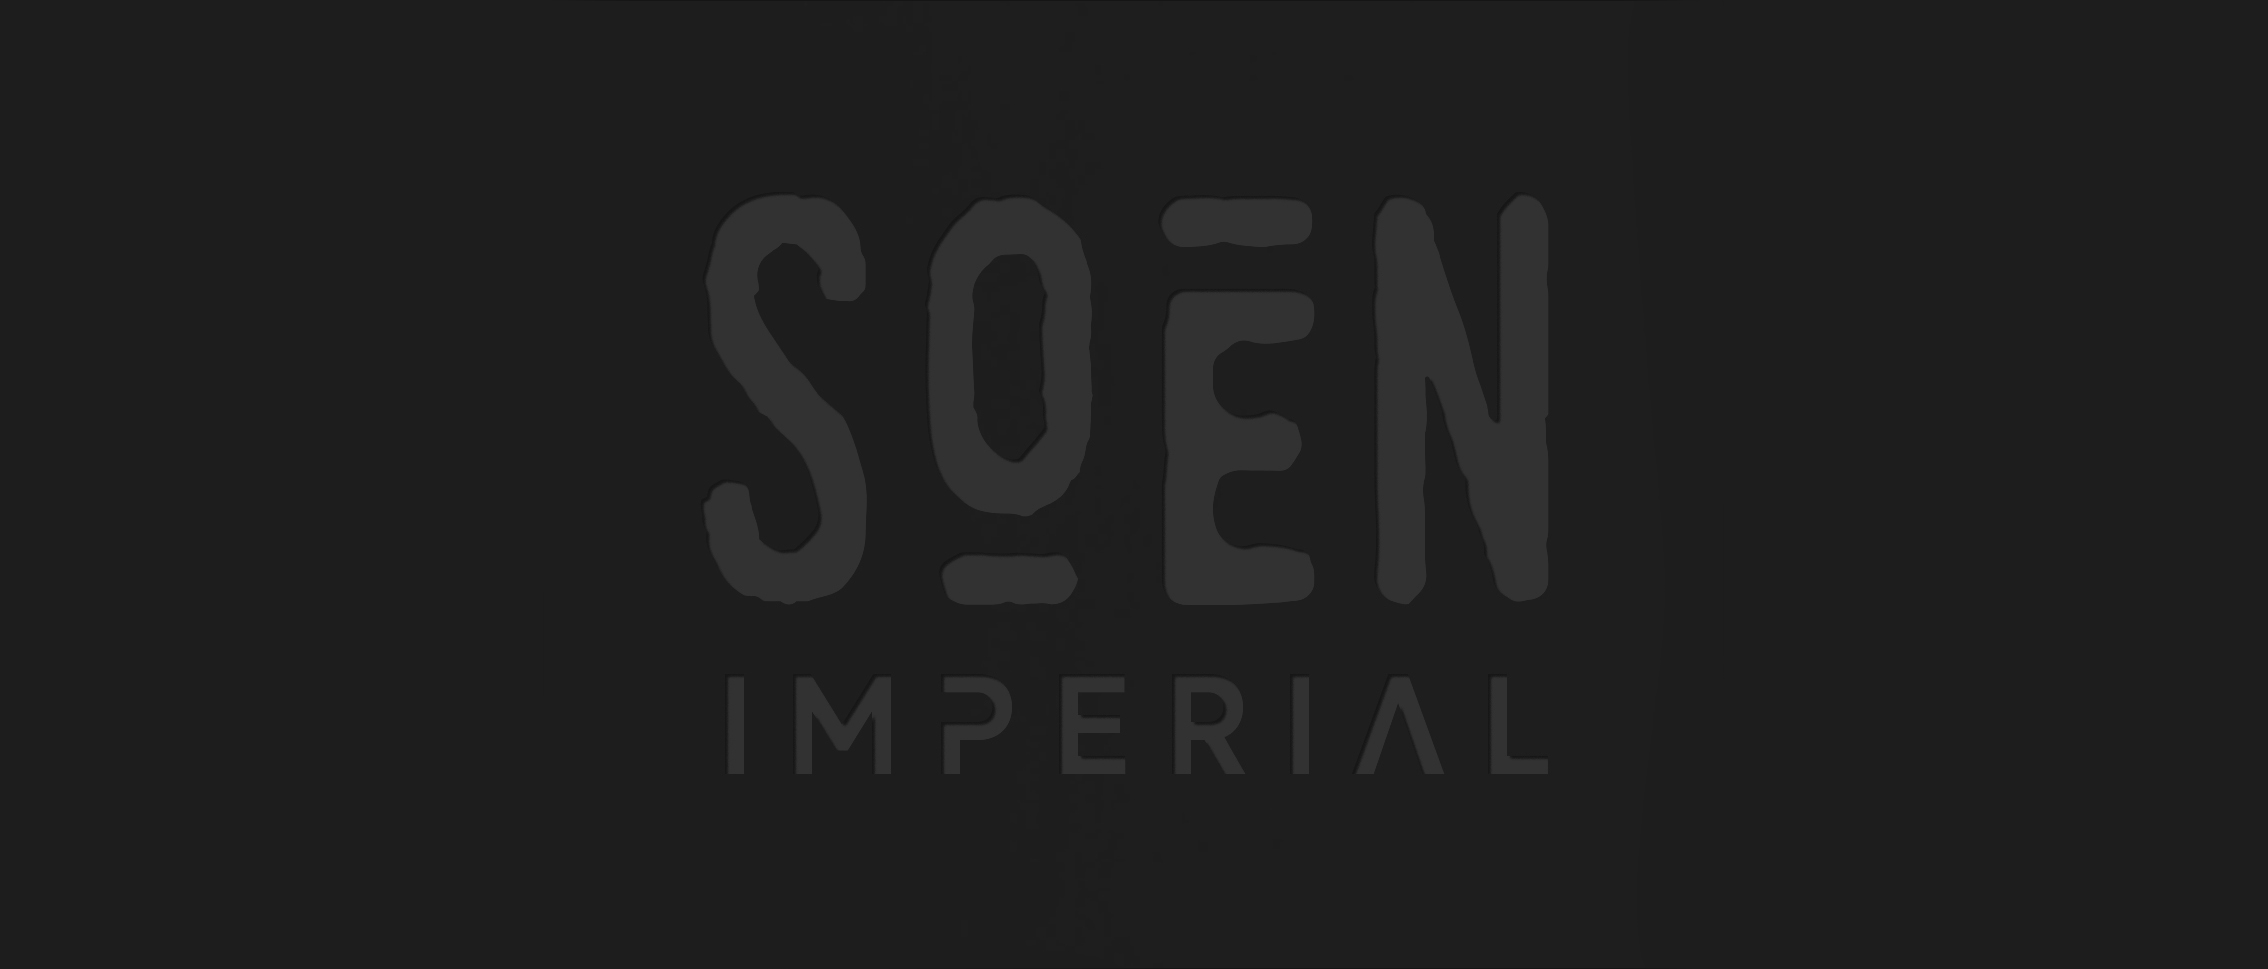 SOEN-Banner